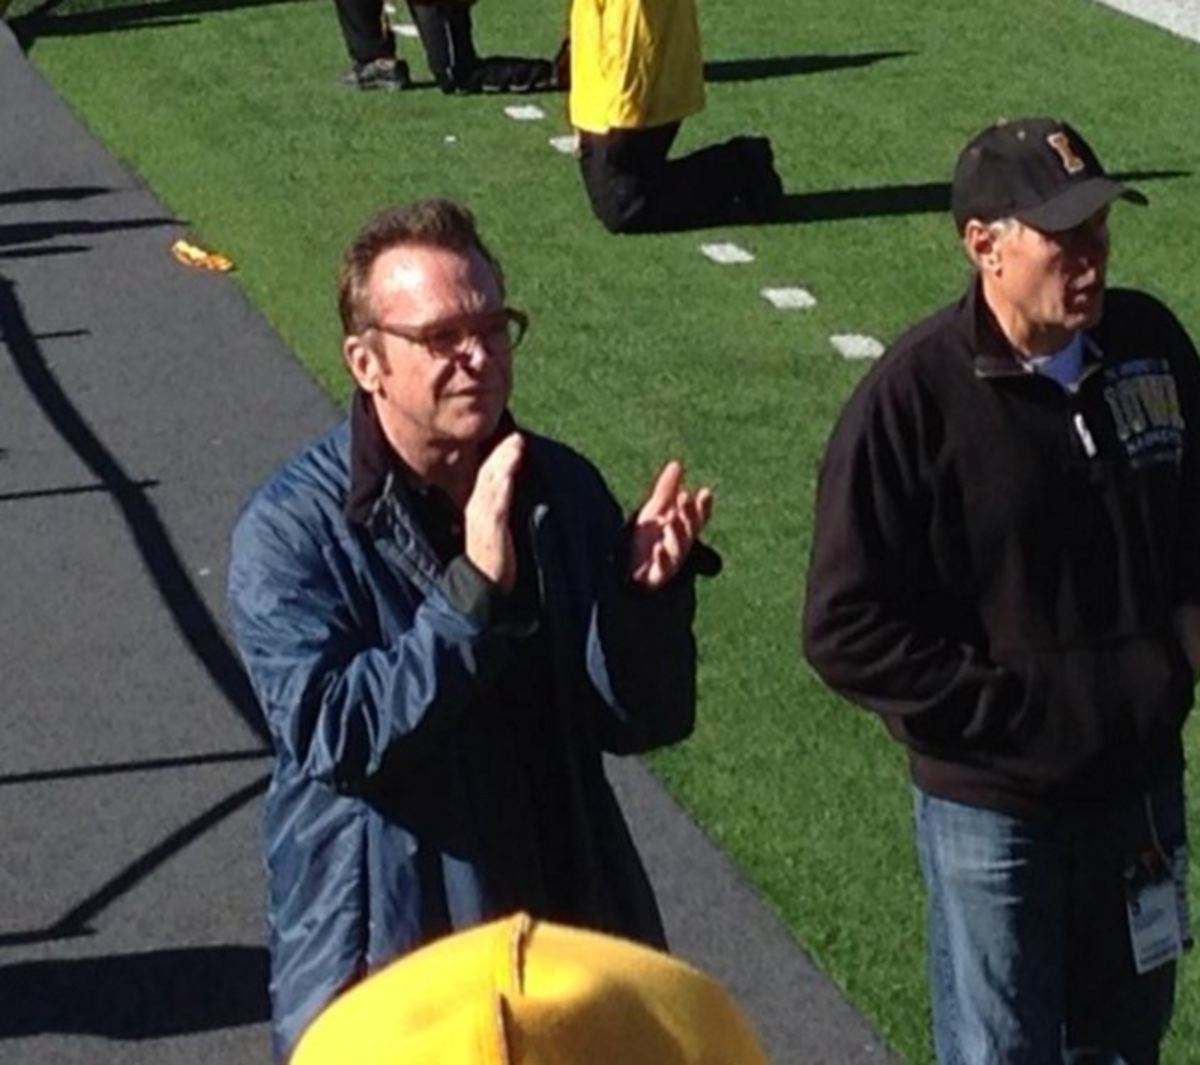 Tom Arnold claps for Iowa football.